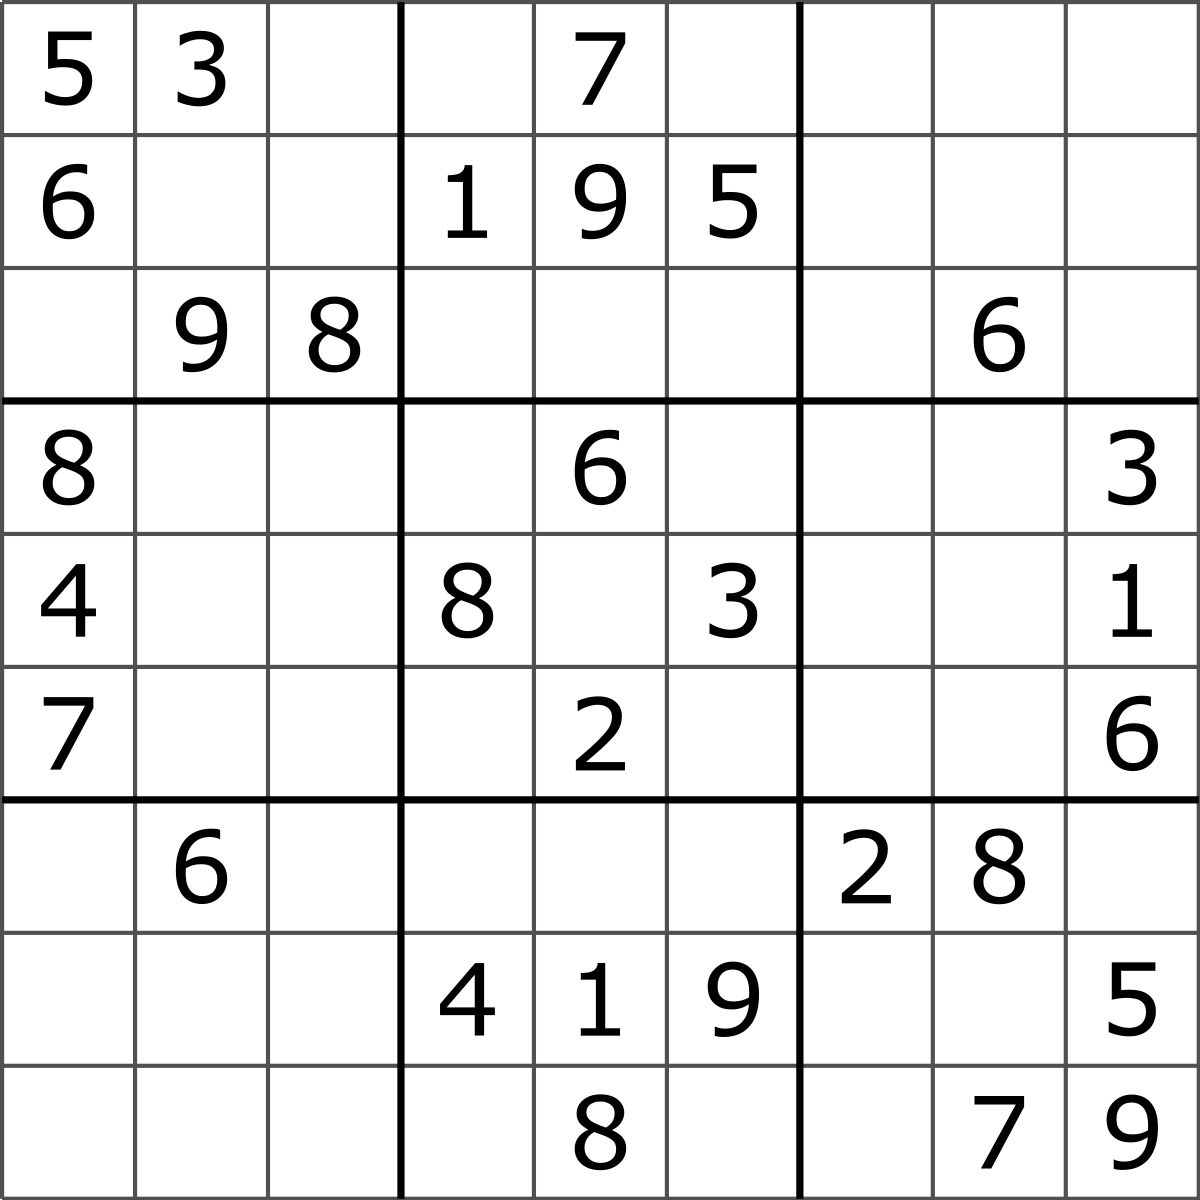 free-online-sudoku-printable-trackid-sp-006-sudoku-printable-sudoku